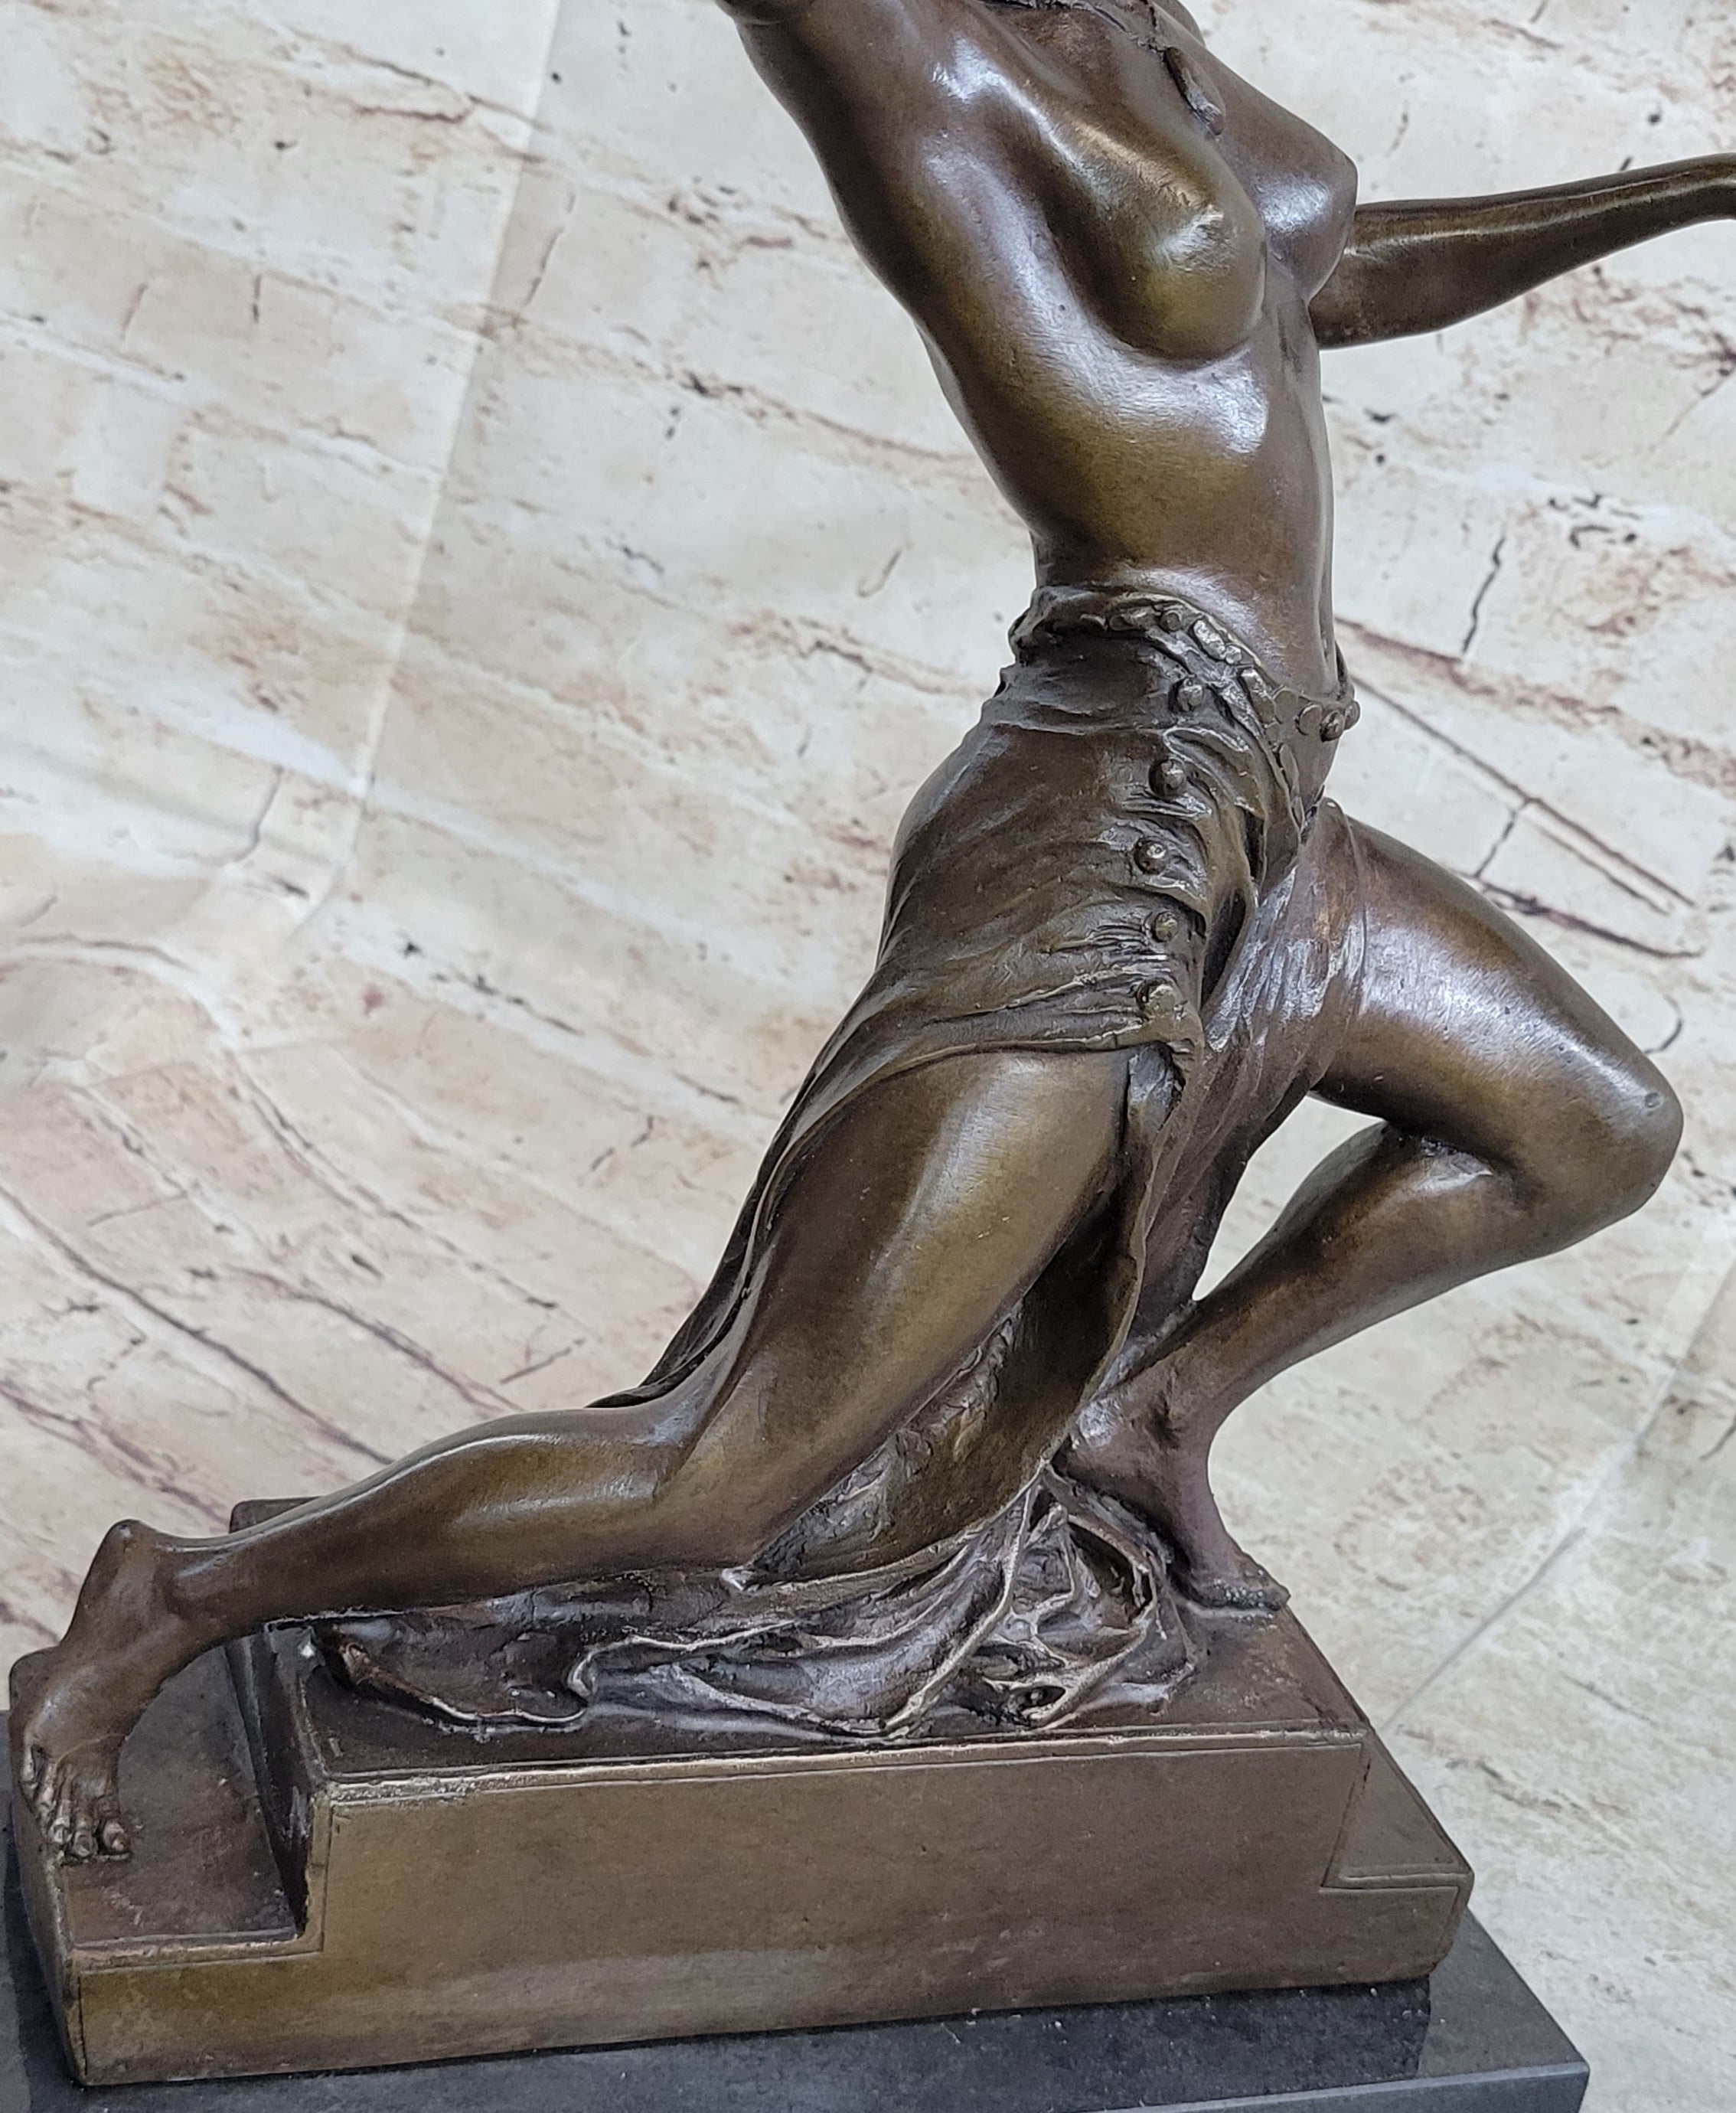 Handcrafted bronze sculpture SALE Decor Wreath Head Dancer Belly Nude Exotic